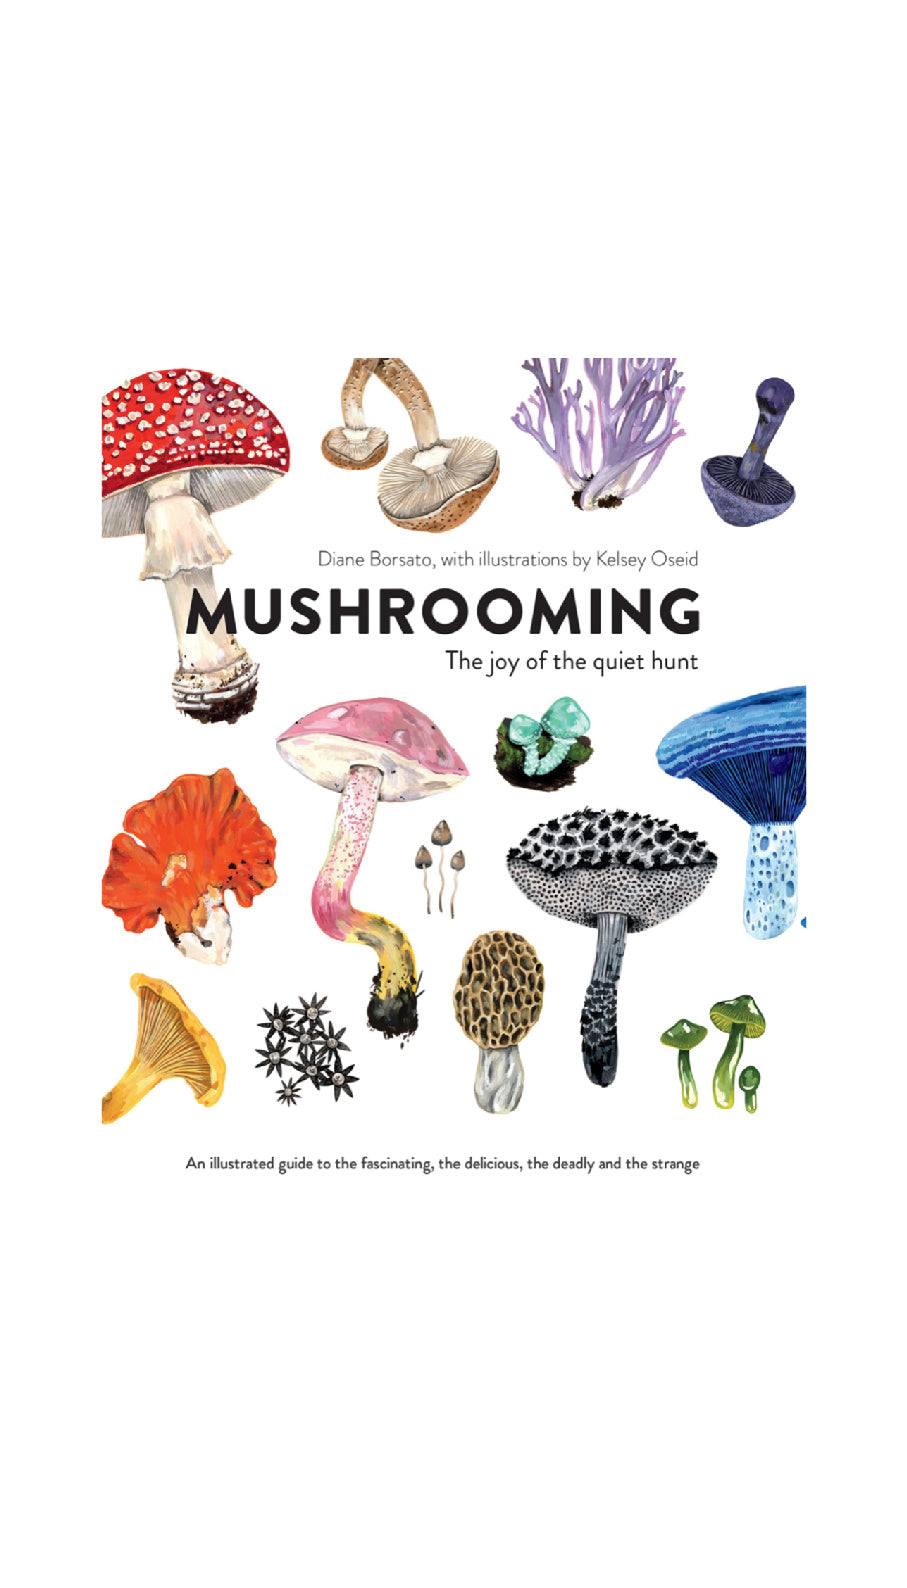 Mushrooming: The Joy of the Quiet Hunt / DIANE BORSATO / KELSEY OSEID (ILLUS.)